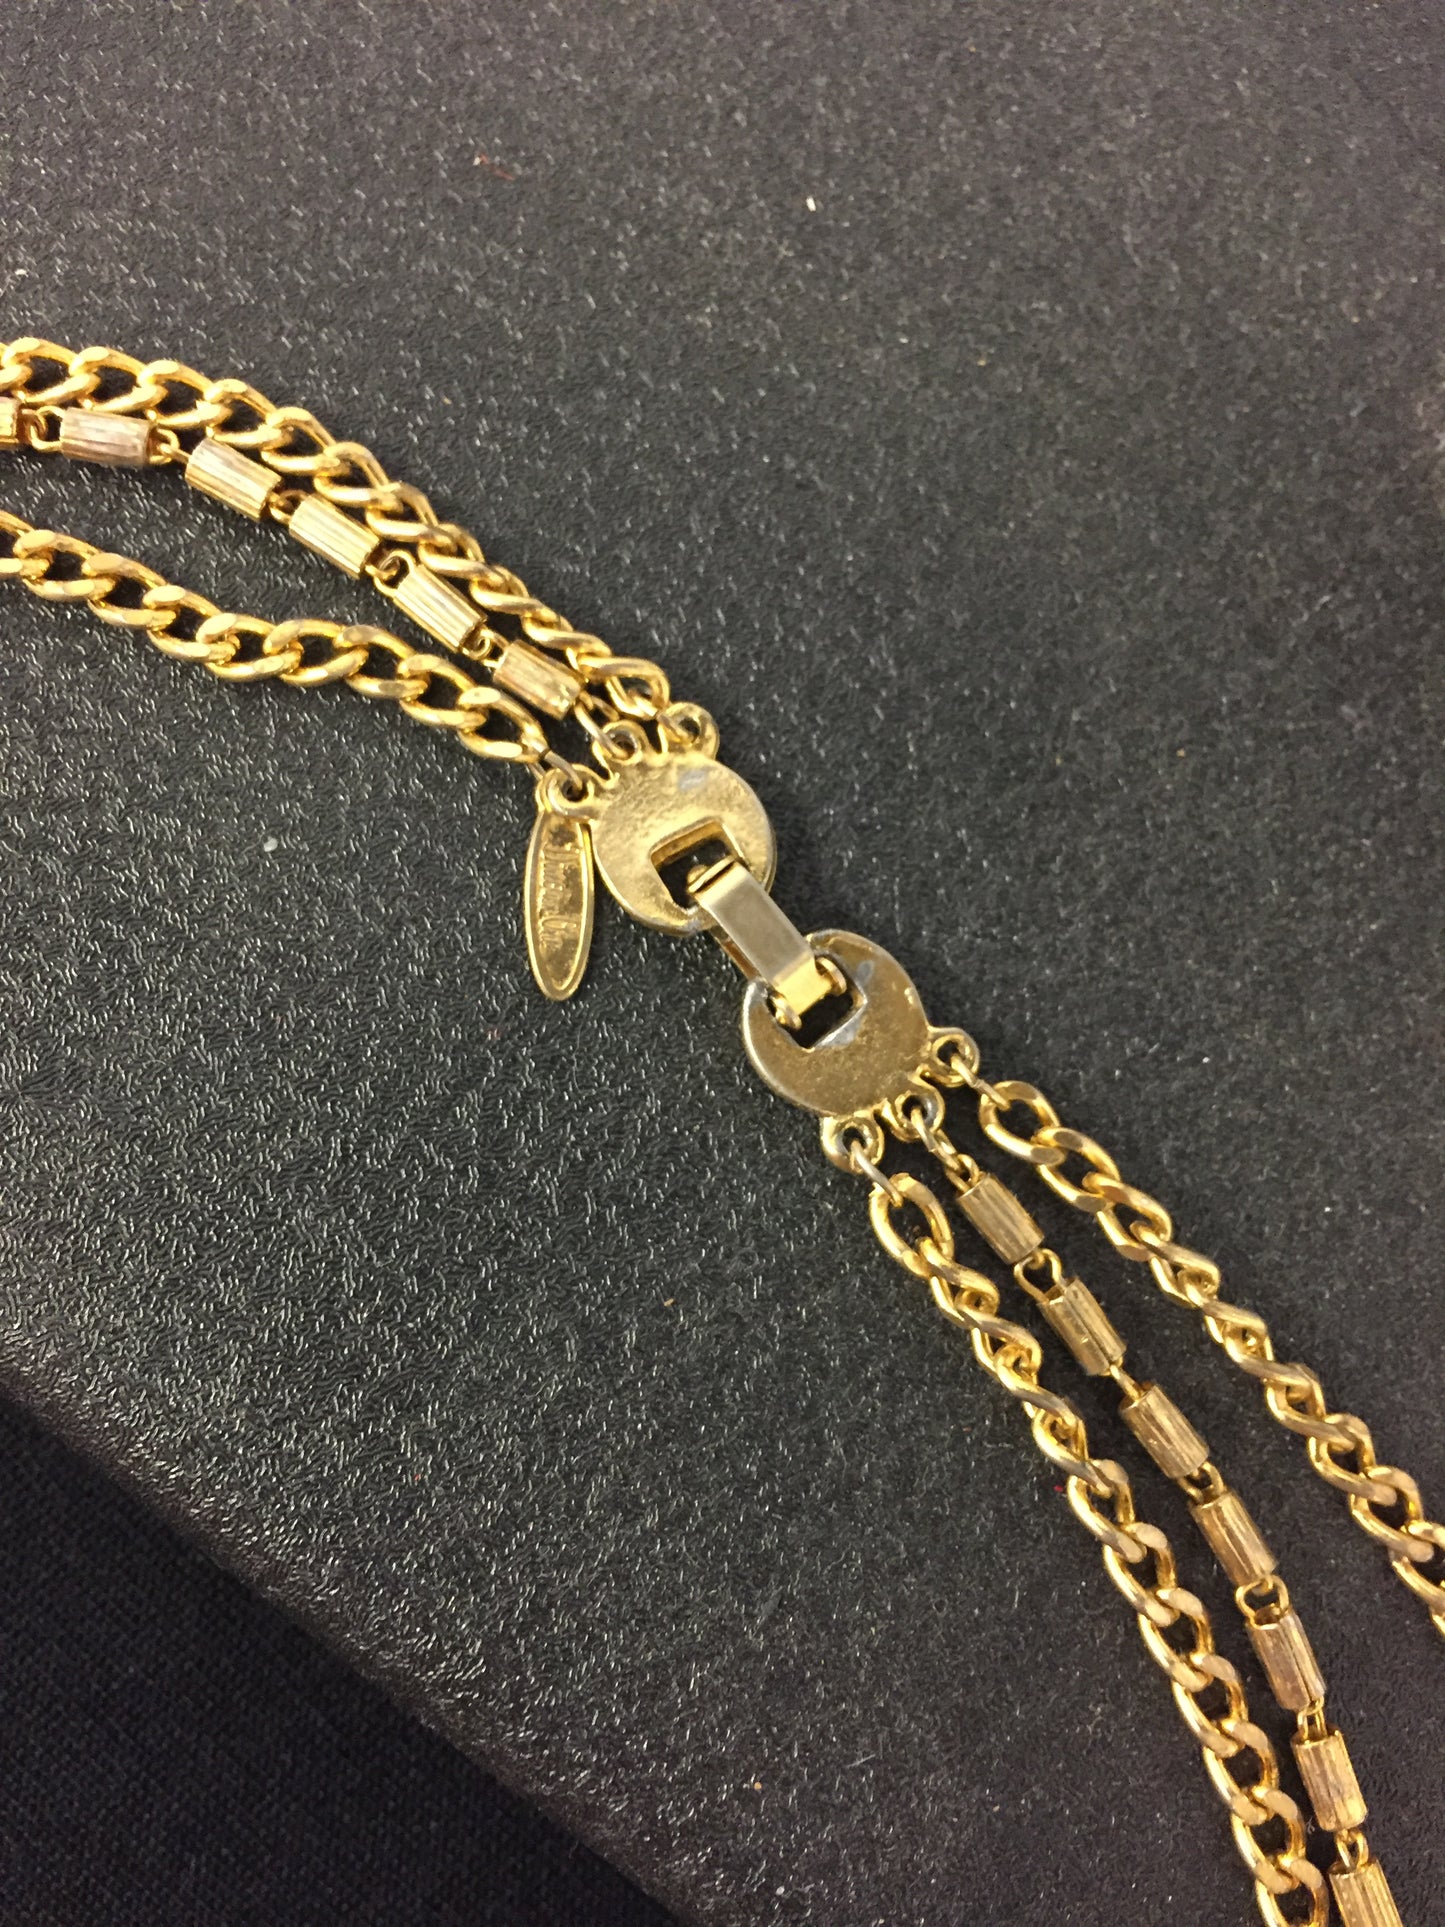 Vintage 1970's Designer Direction One Triple Chain Goldtone Necklace